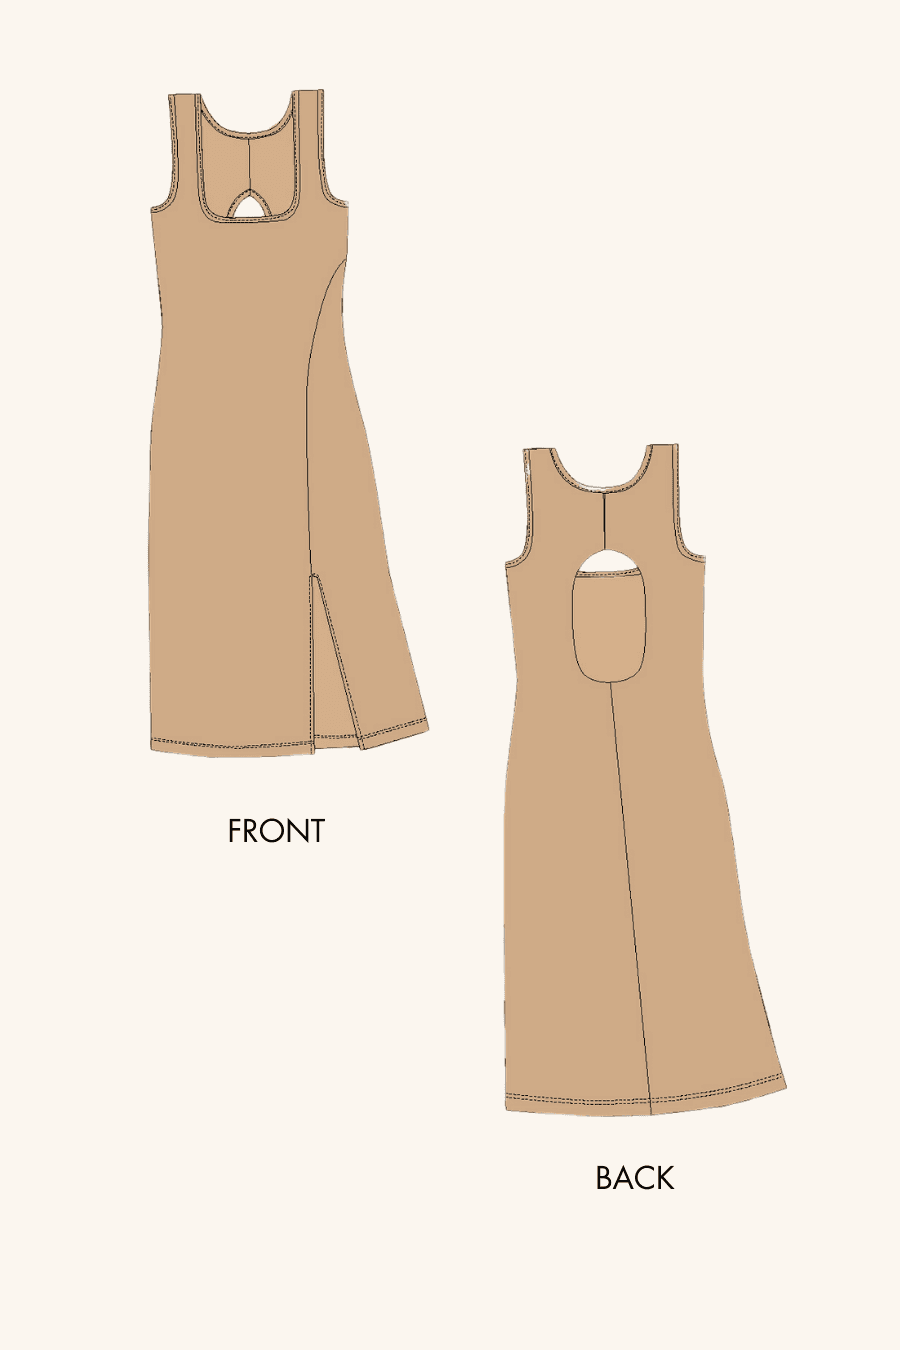 Cut Out Dress Sewing Pattern 'Pamela'